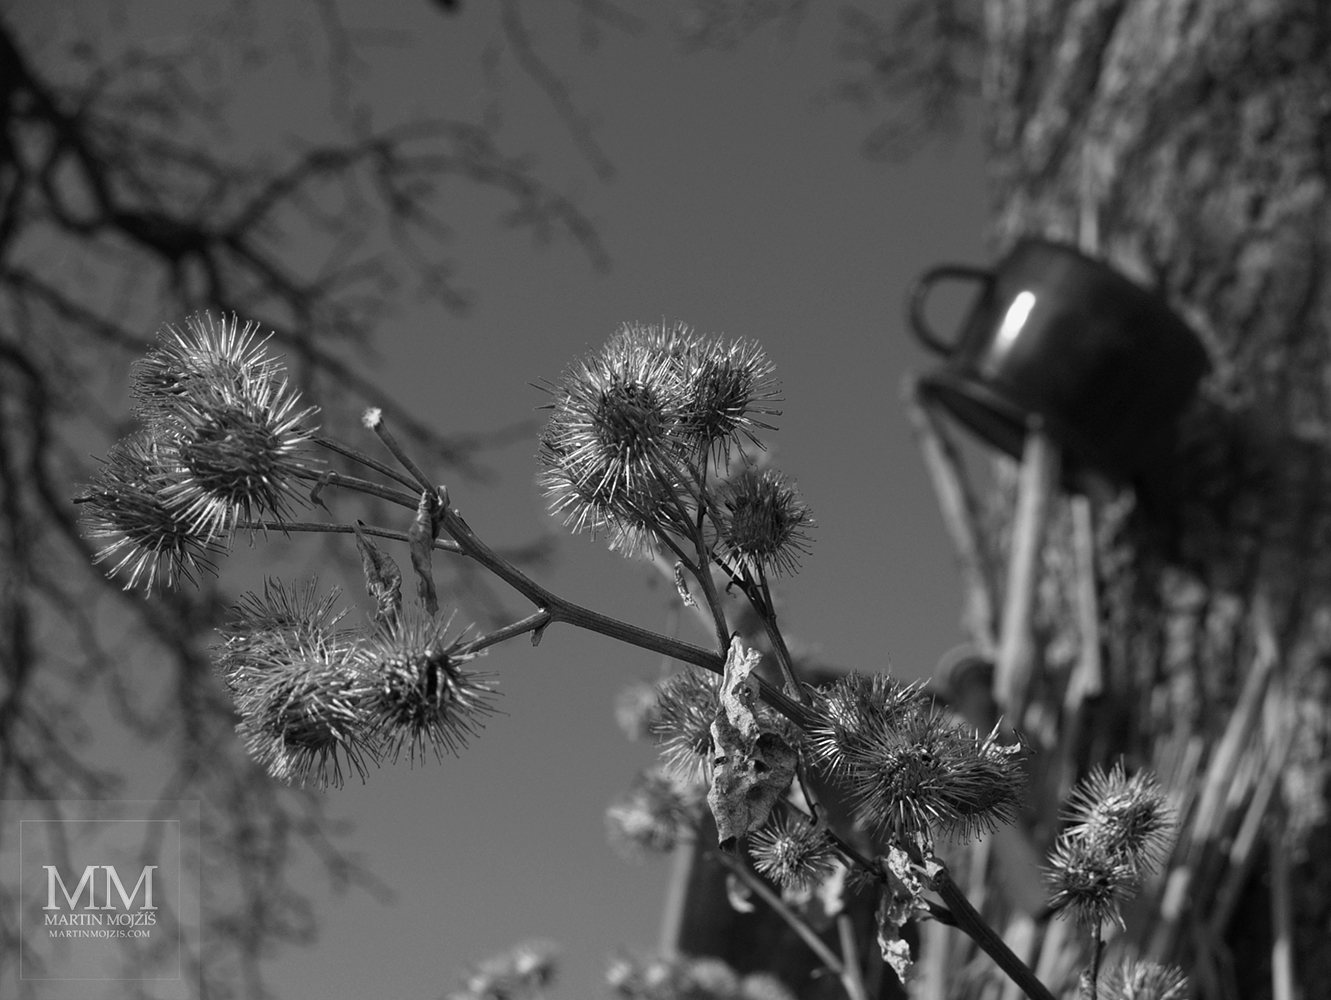 Plody lopuchu, v pozadí kmen stromu a konvička. Fotografie s názvem BODLÁKY A KONVIČKA.